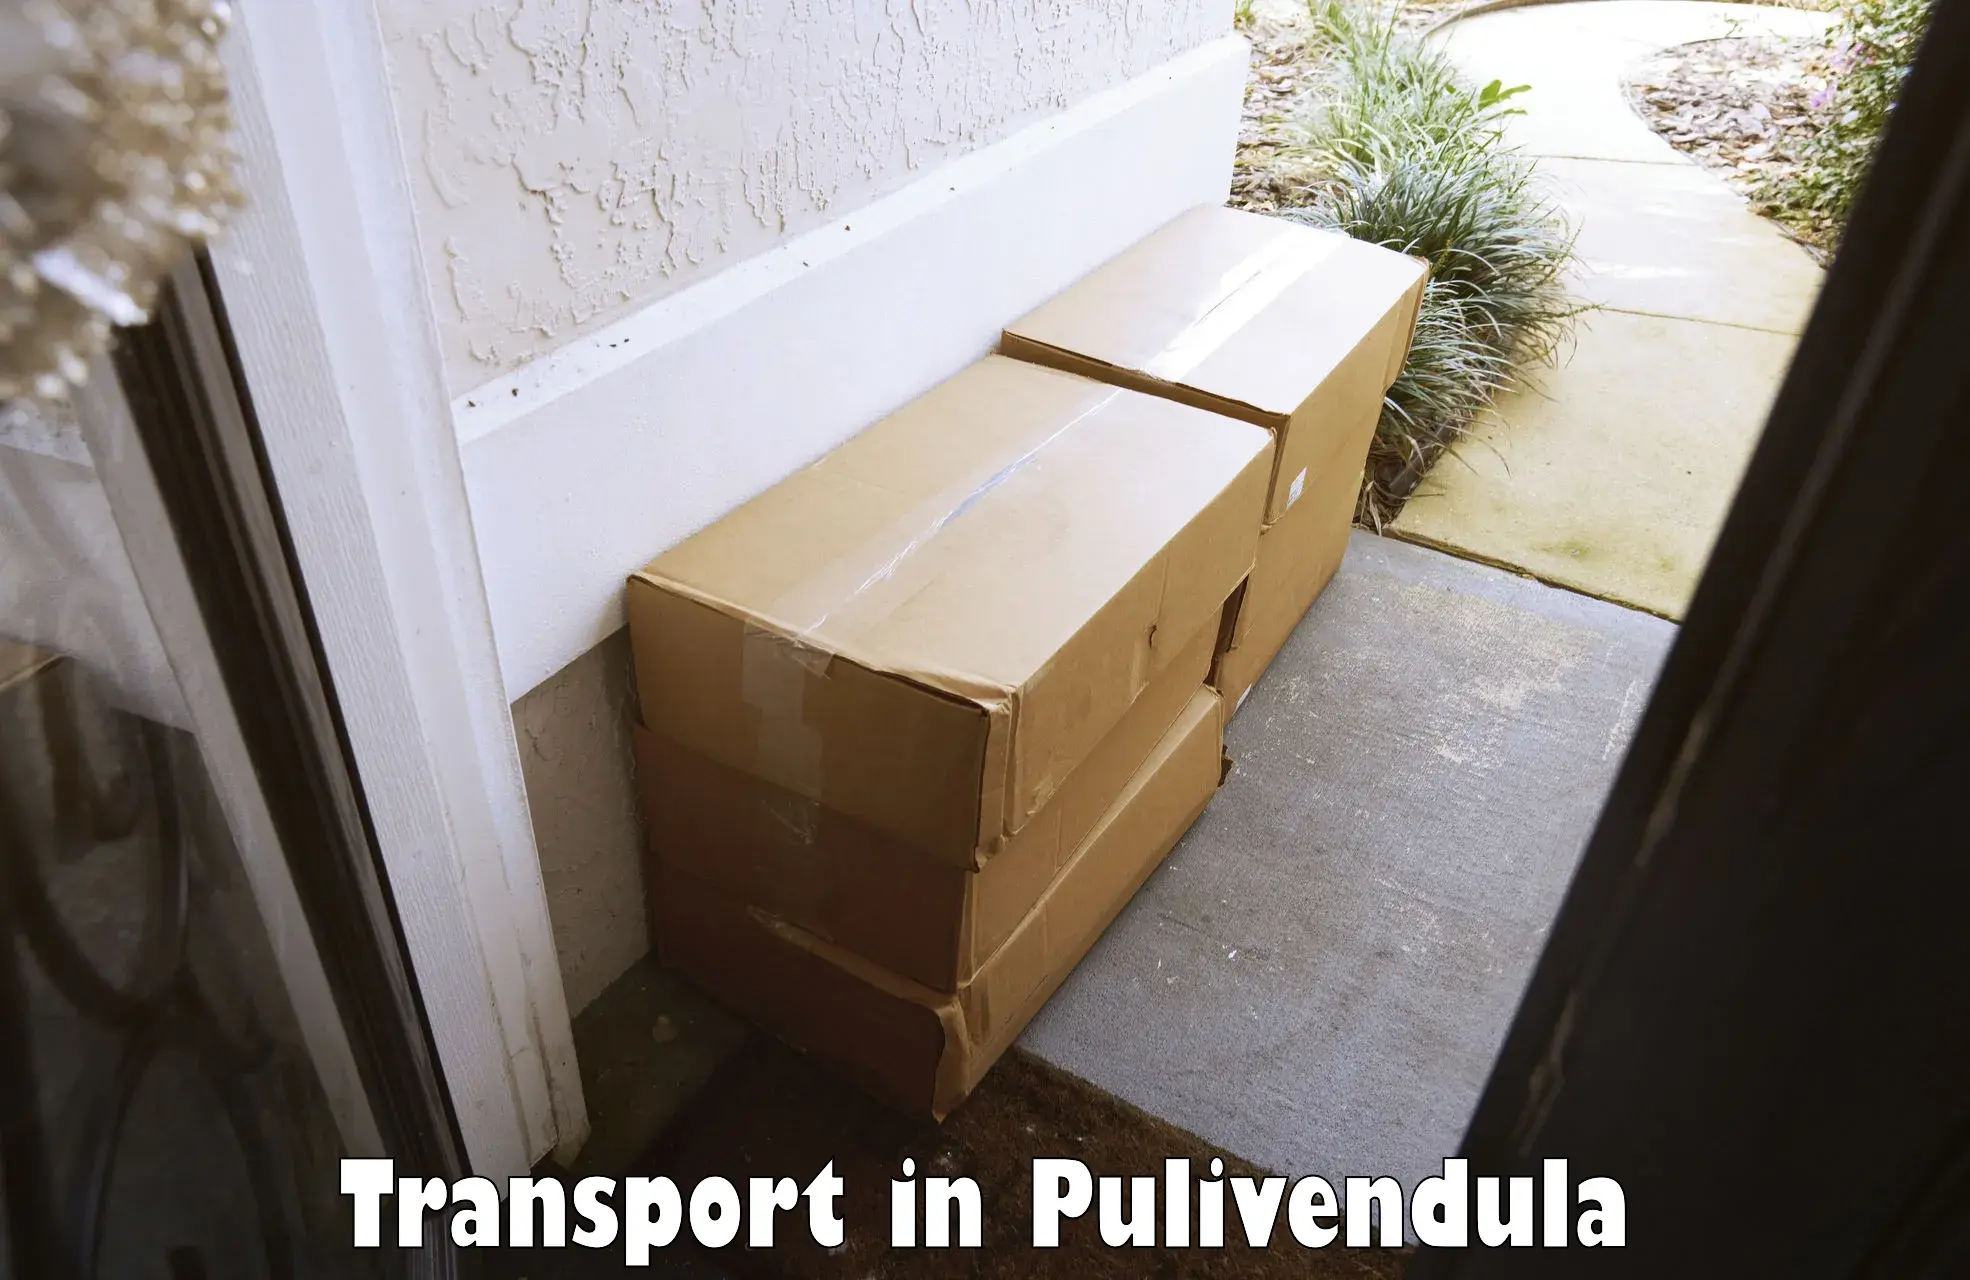 Road transport online services in Pulivendula